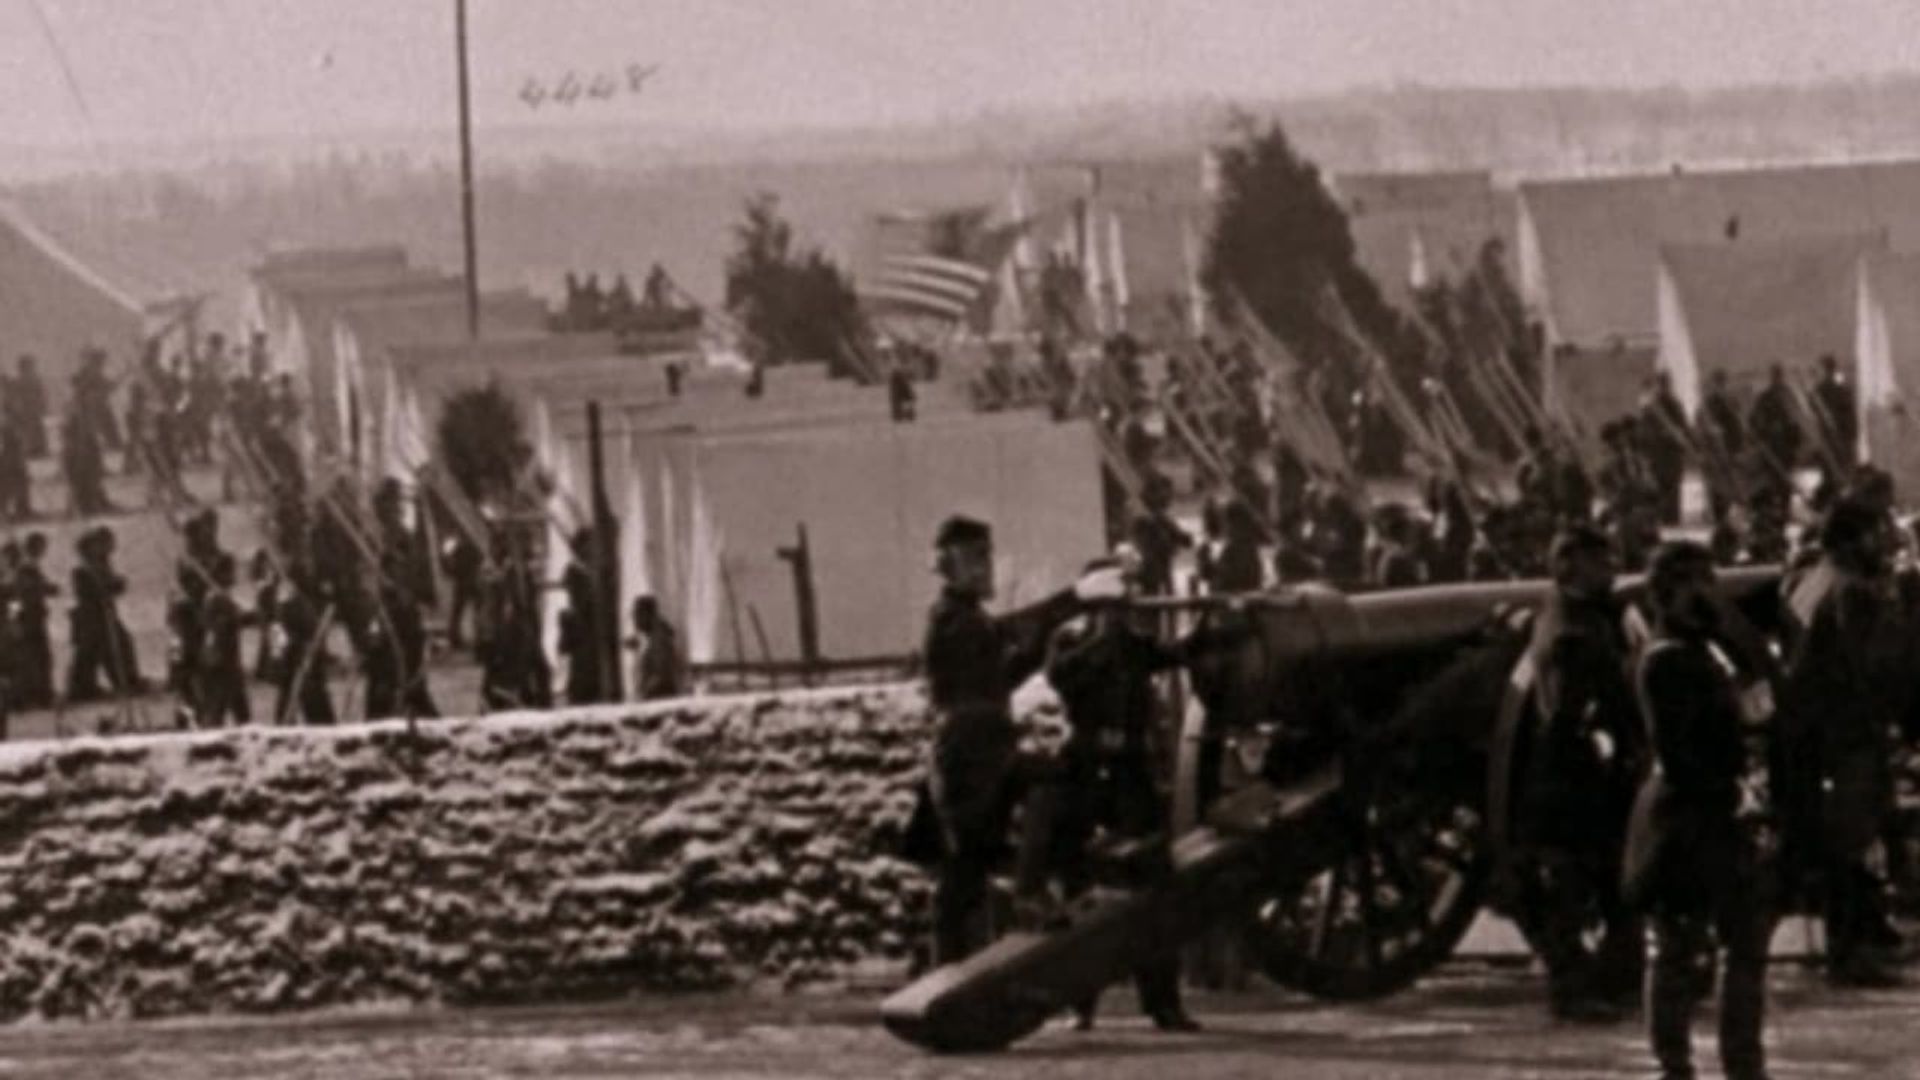 The Civil War background